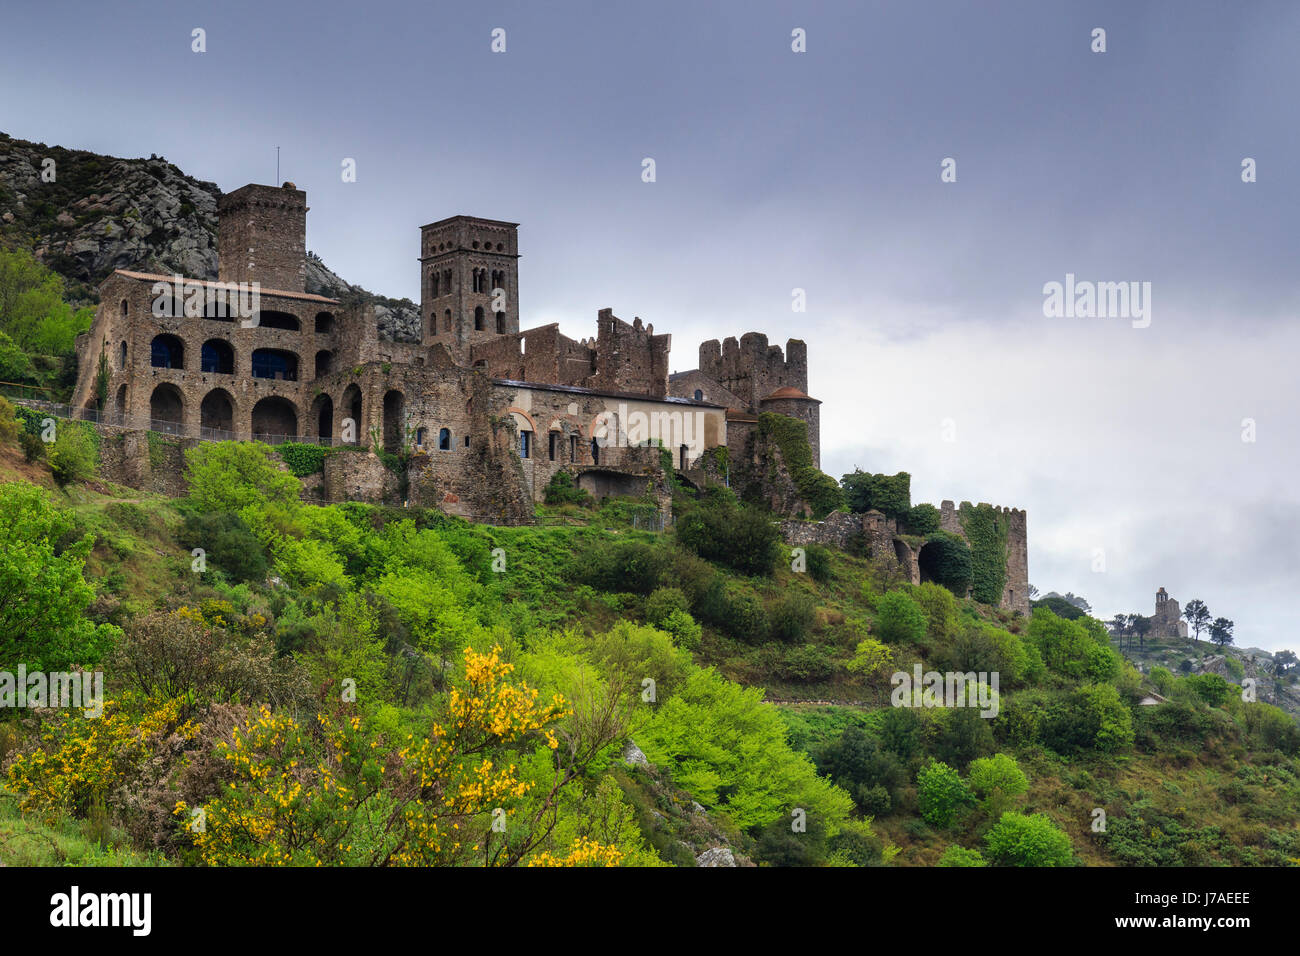 Spain, Catalonia, Costa Brava, El Port de la Selva, Monastery of Sant Pere de Rodes Stock Photo